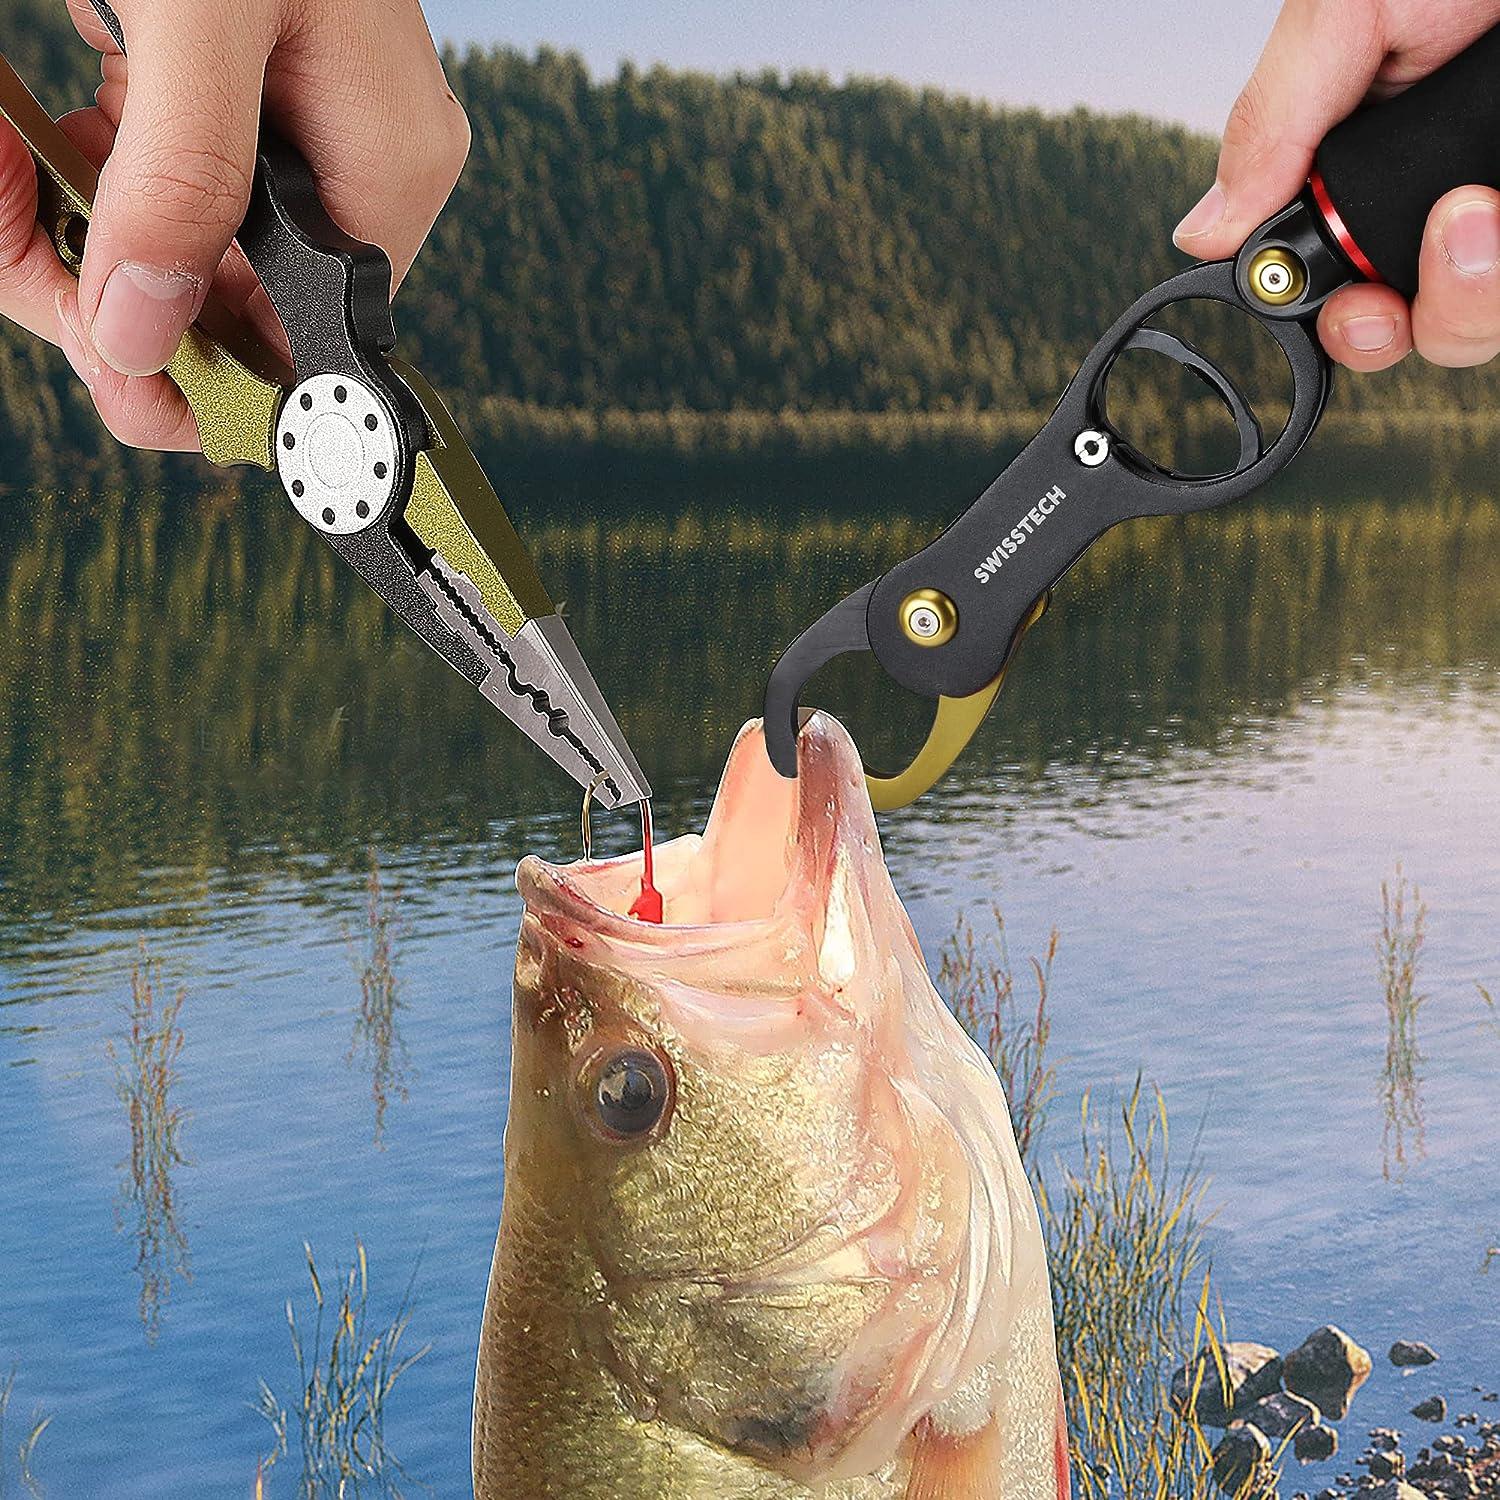 Swiss+Tech Fishing Tool Kit, Fish Gripper with Scale, Muti